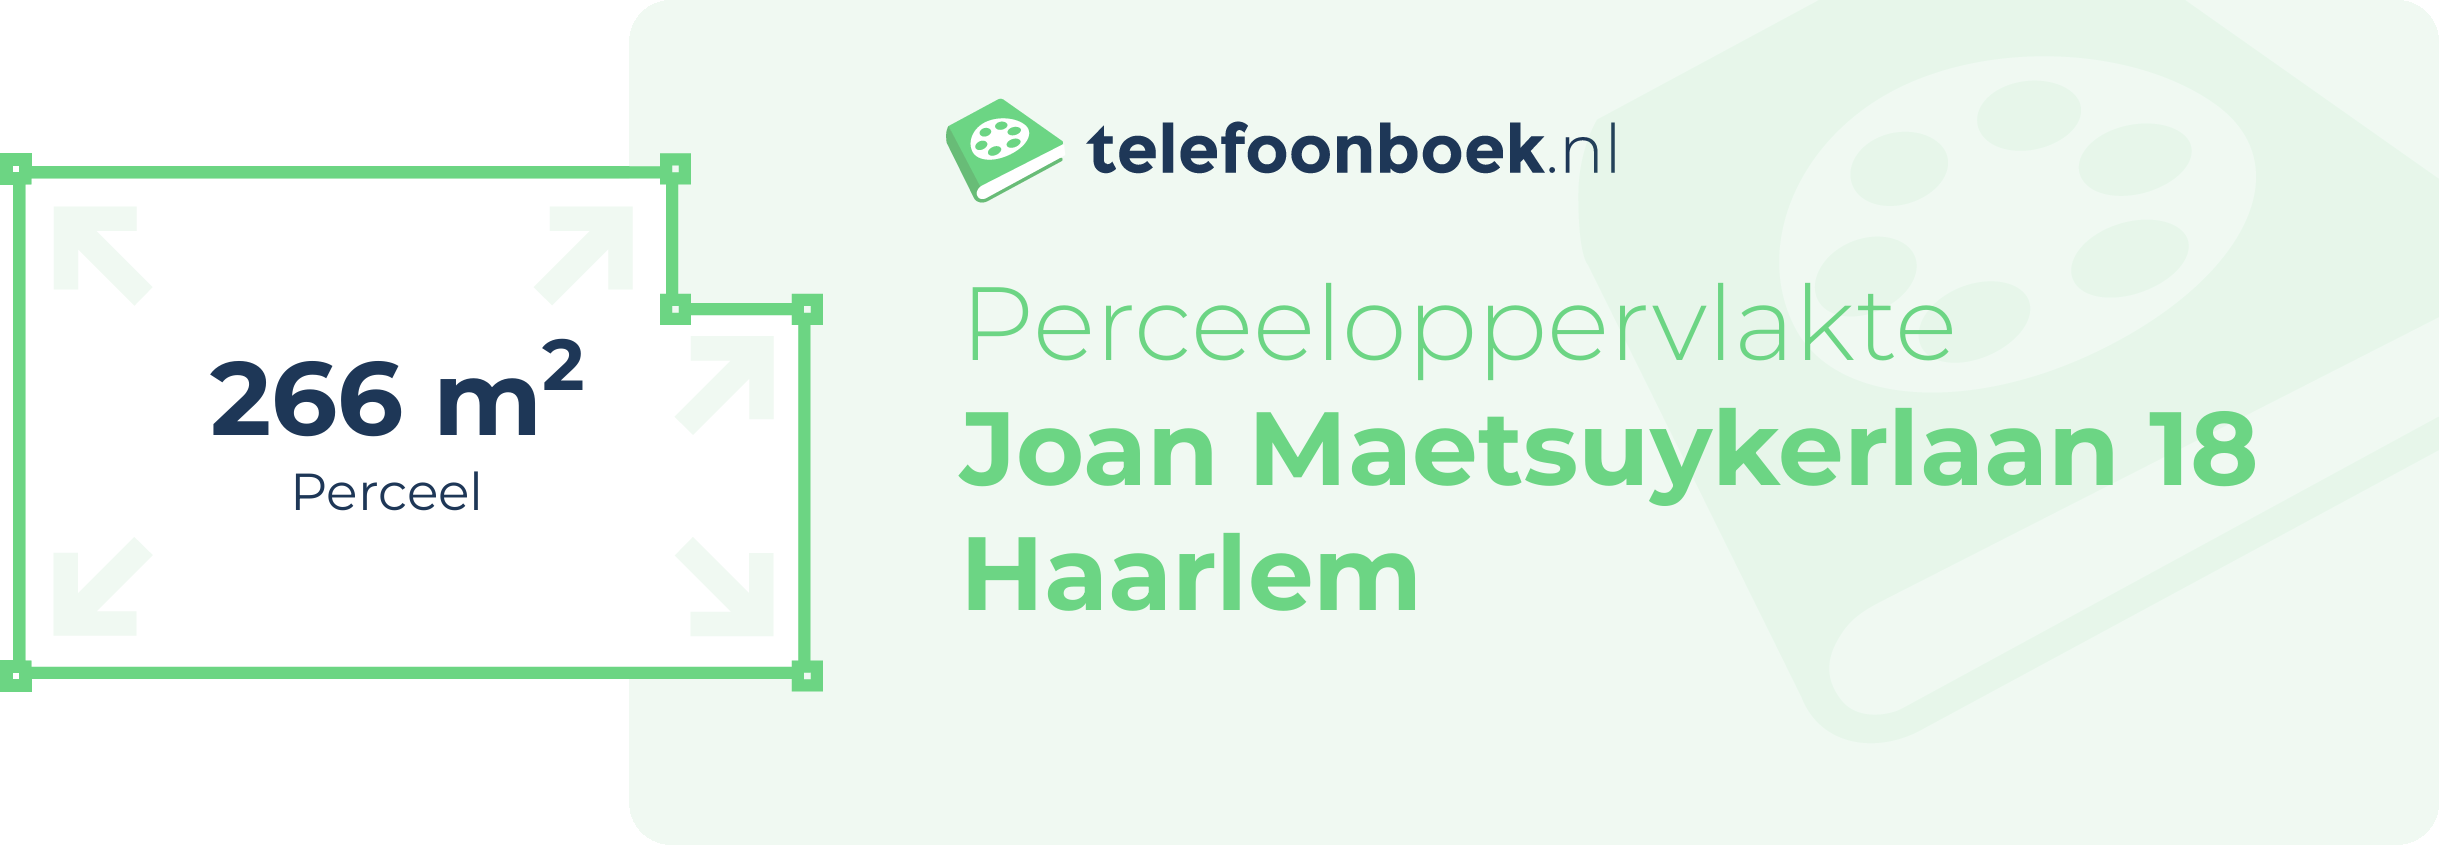 Perceeloppervlakte Joan Maetsuykerlaan 18 Haarlem